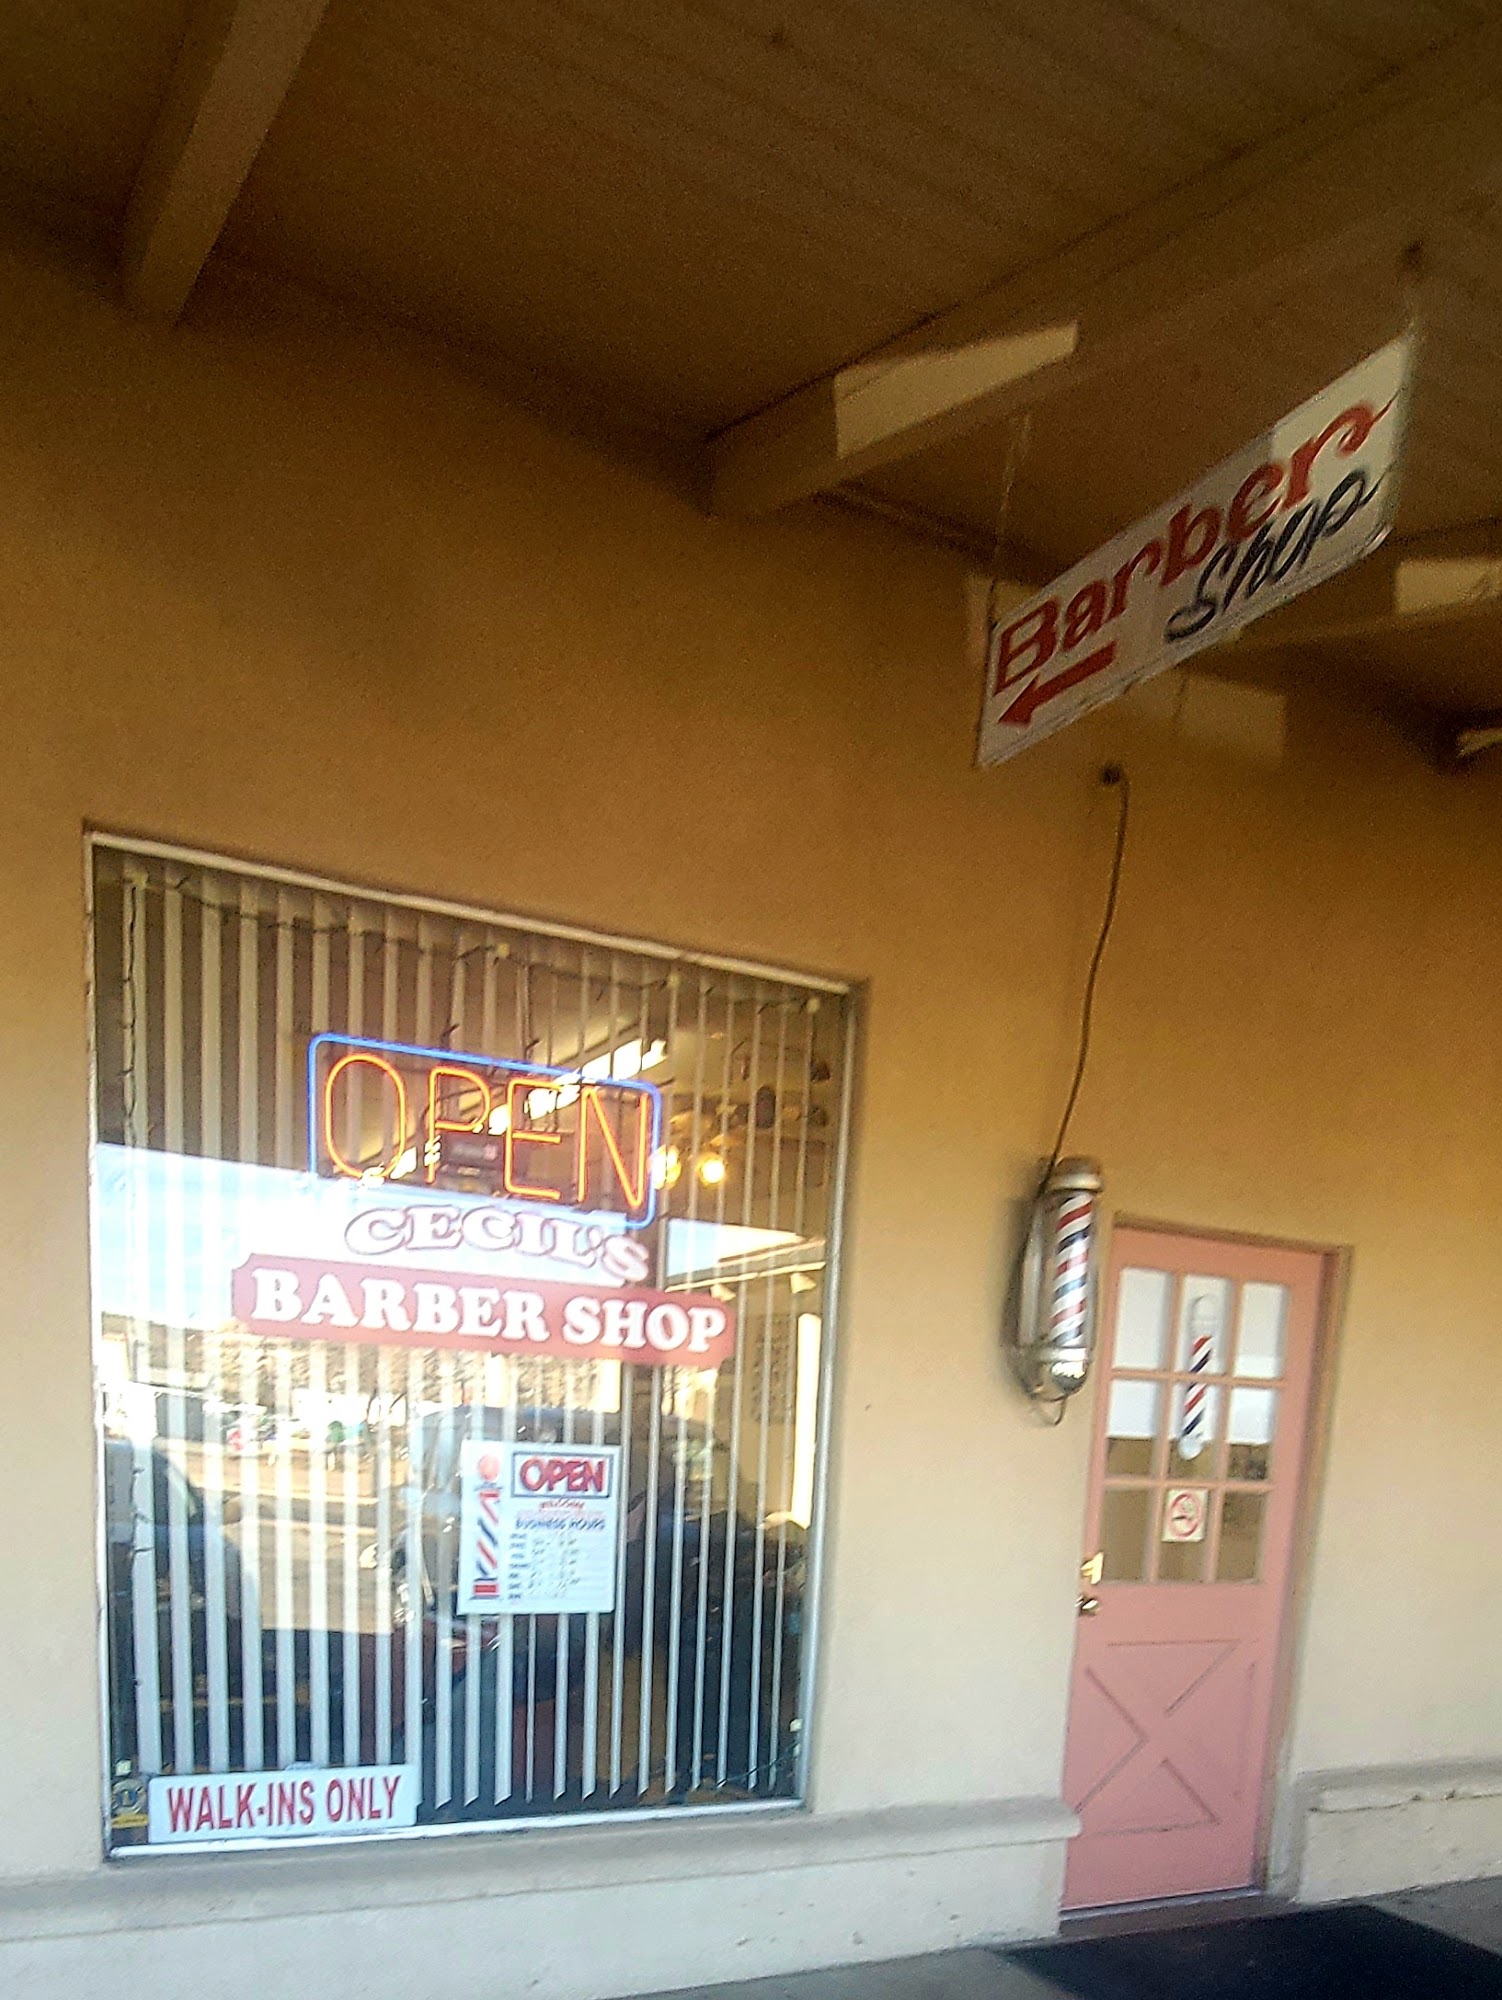 Cecil's Barber Shop 235 S Main St, Camp Verde Arizona 86322